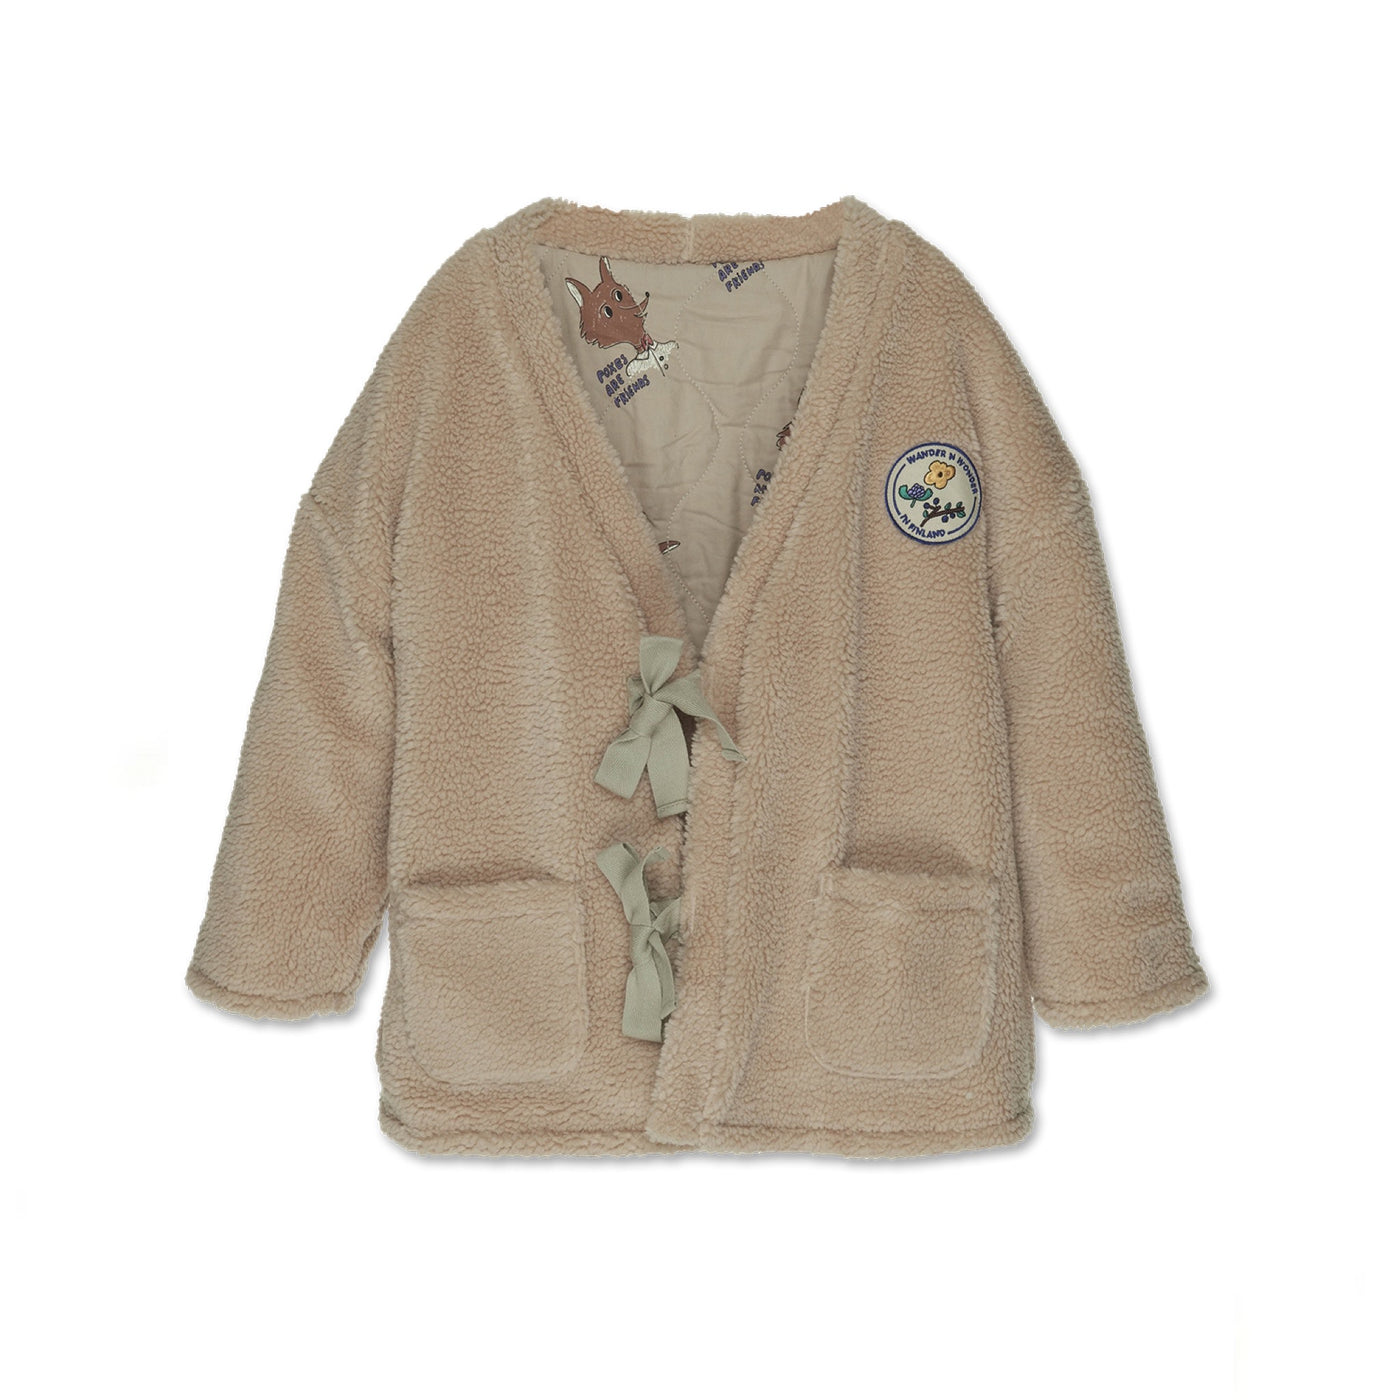 Wander & Wonder - Reversible kimono jacket fox / many sizes